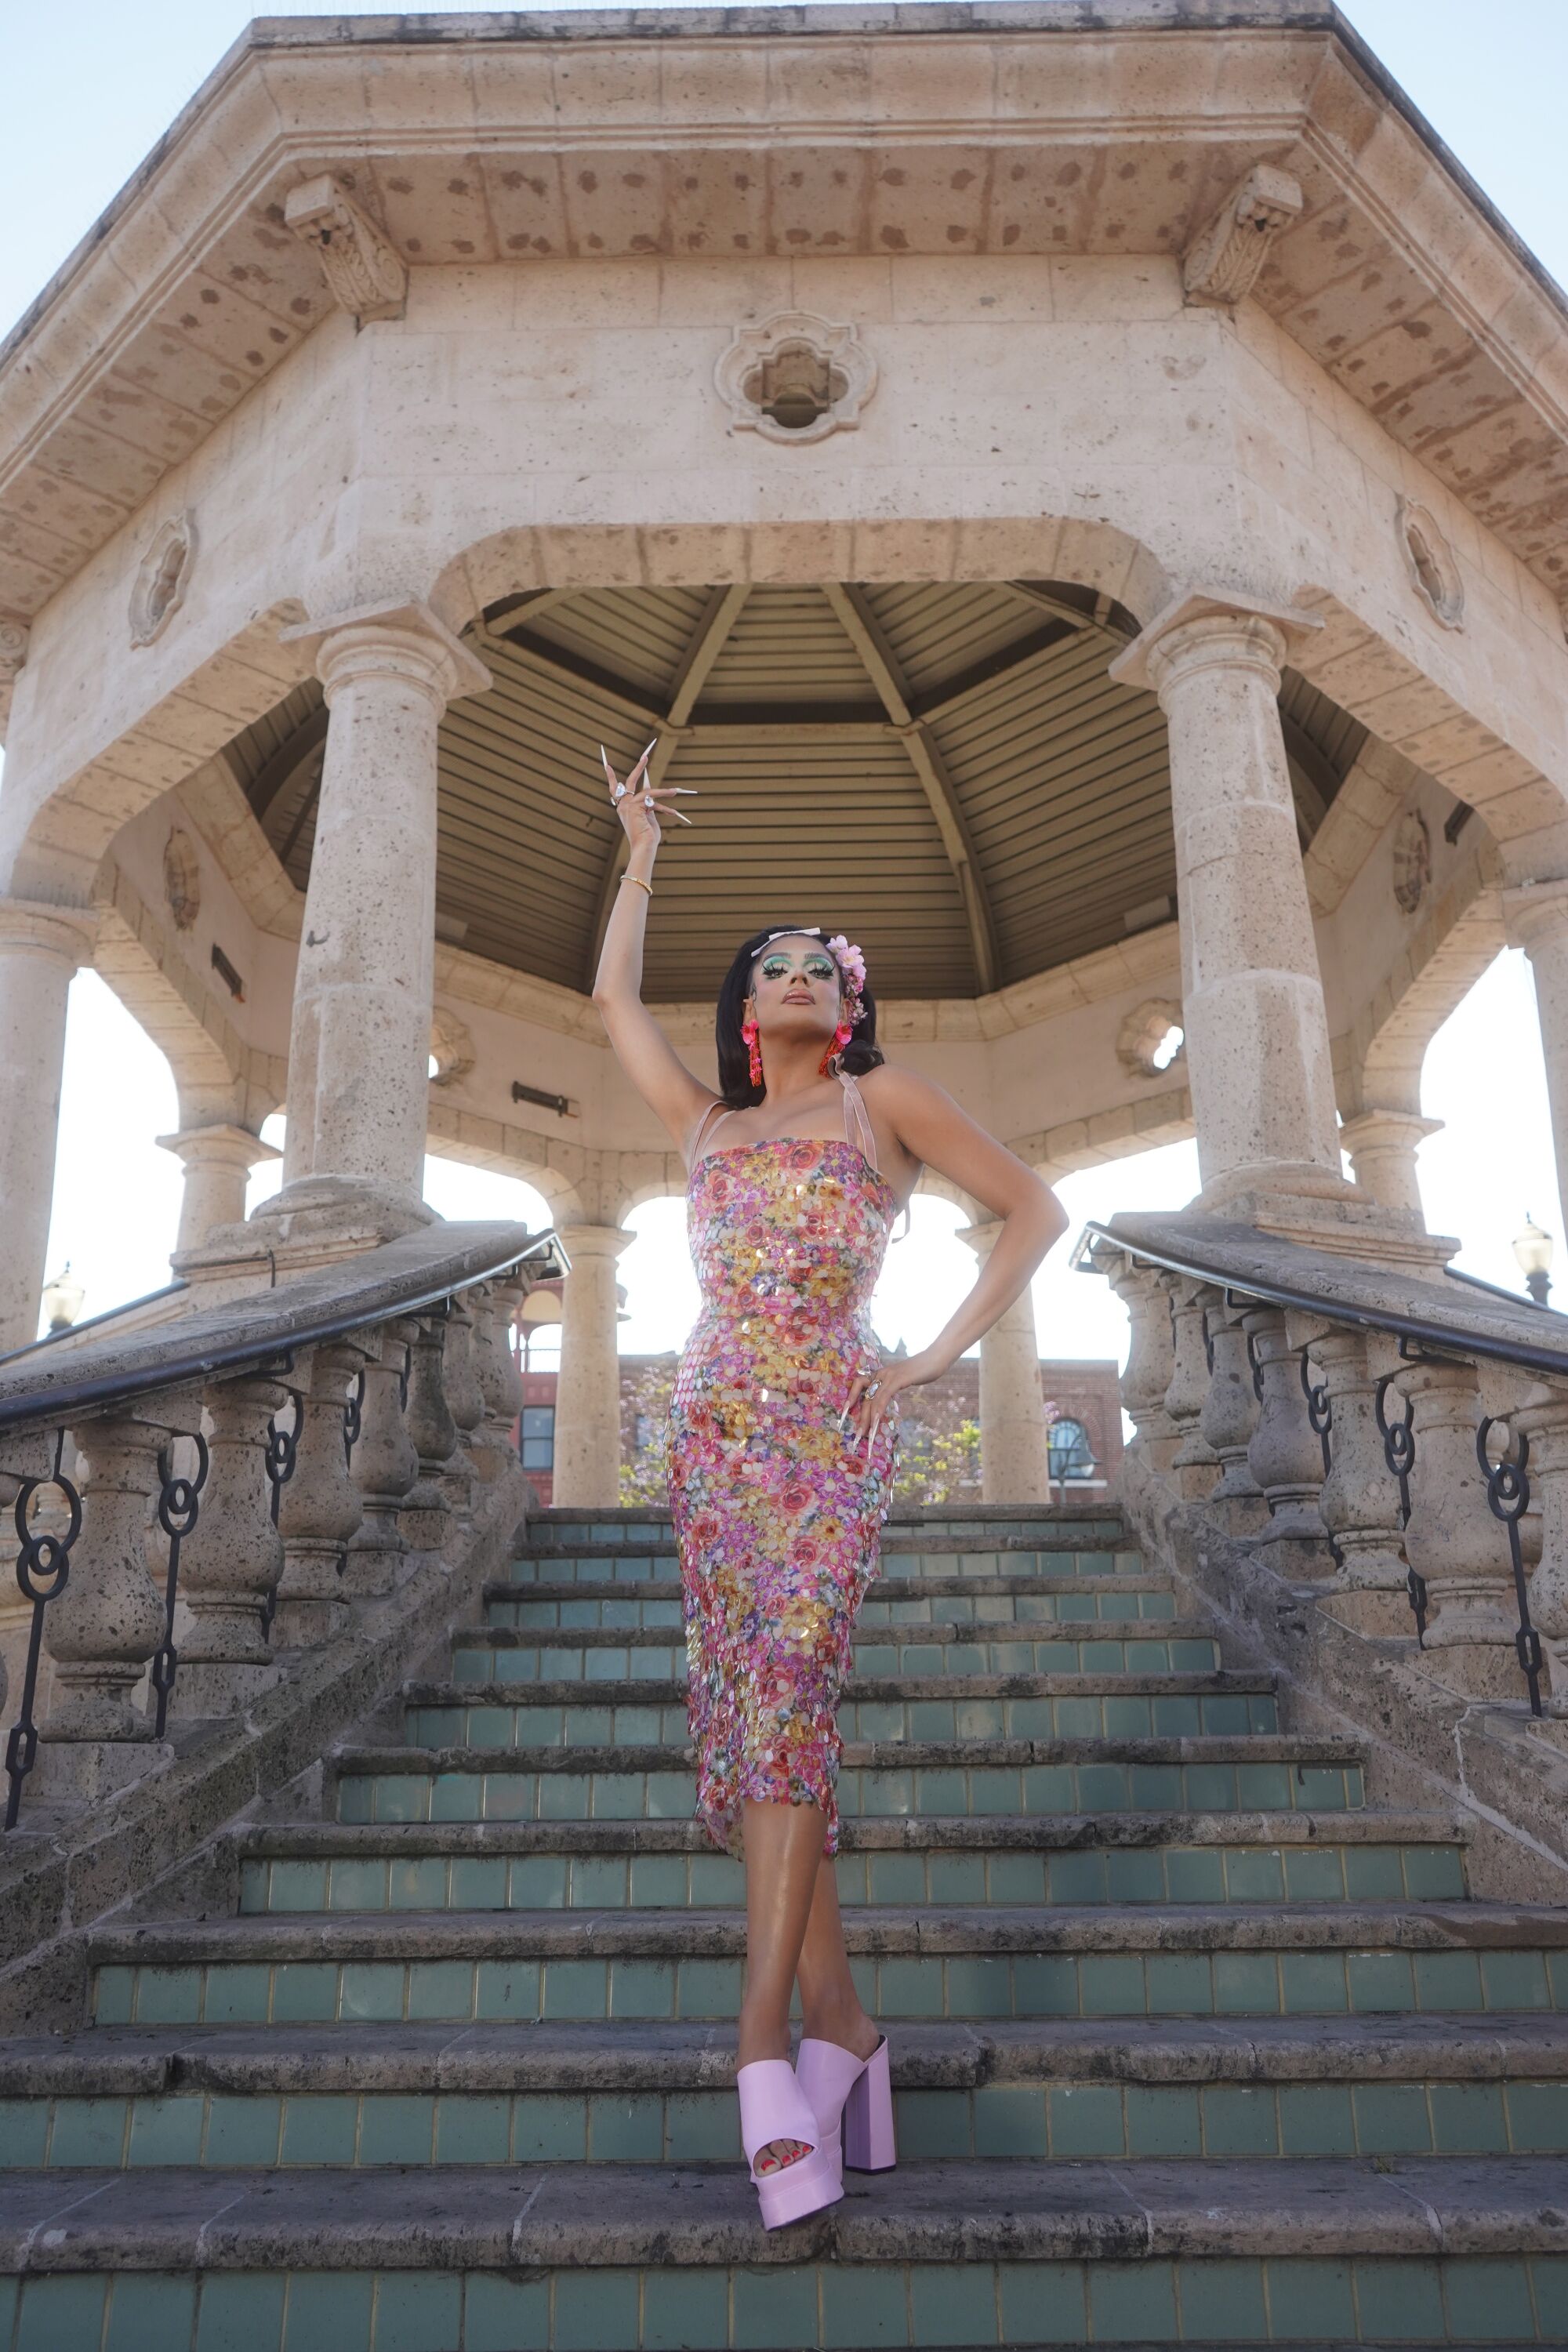 Valentina strikes a pose at Mariachi Plaza.